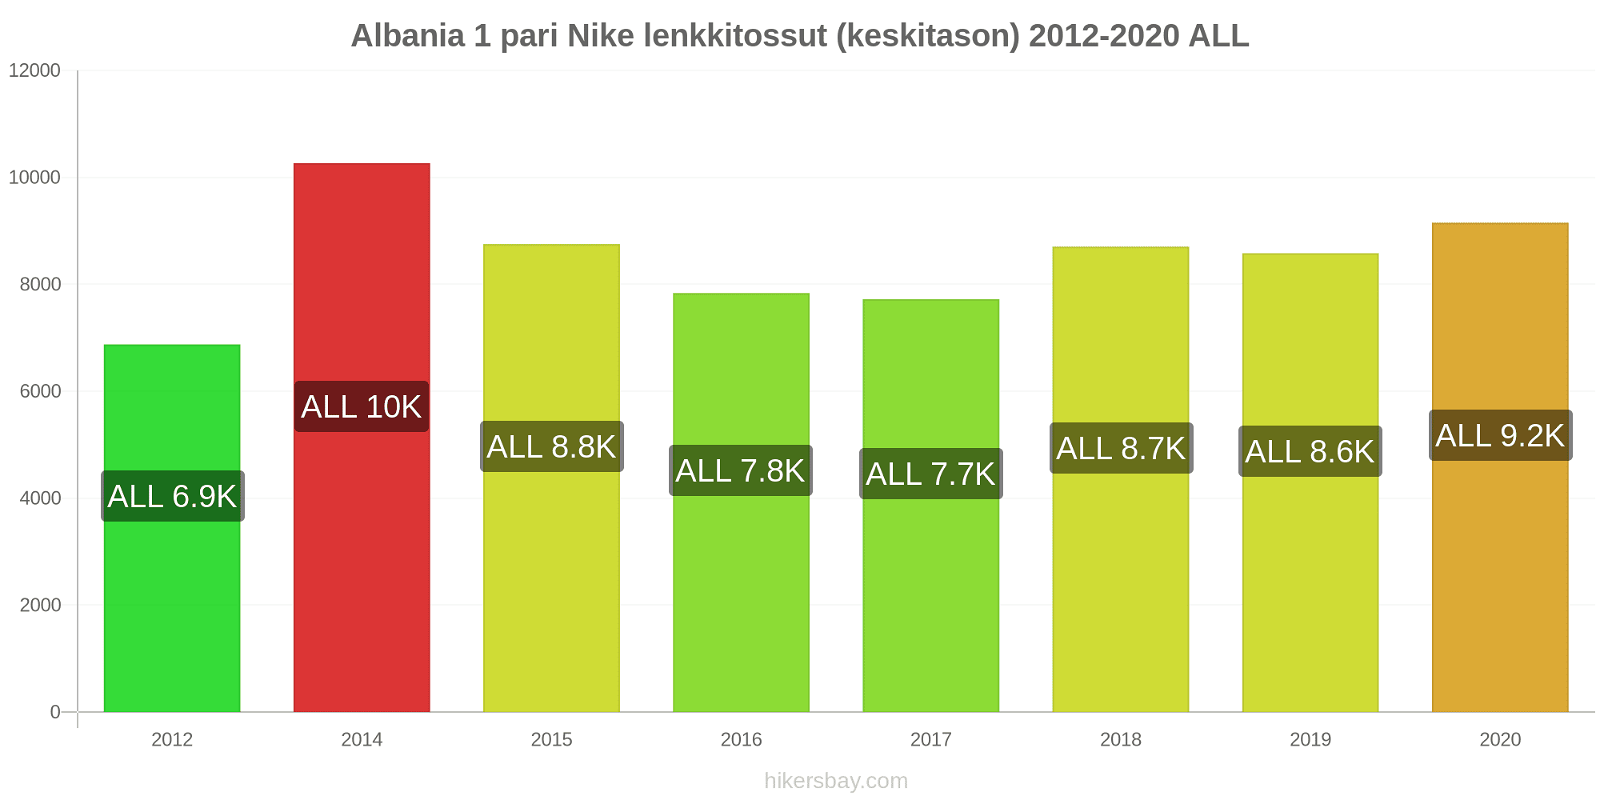 Albania hintojen muutokset 1 pari Nike lenkkitossut (keskitason) hikersbay.com